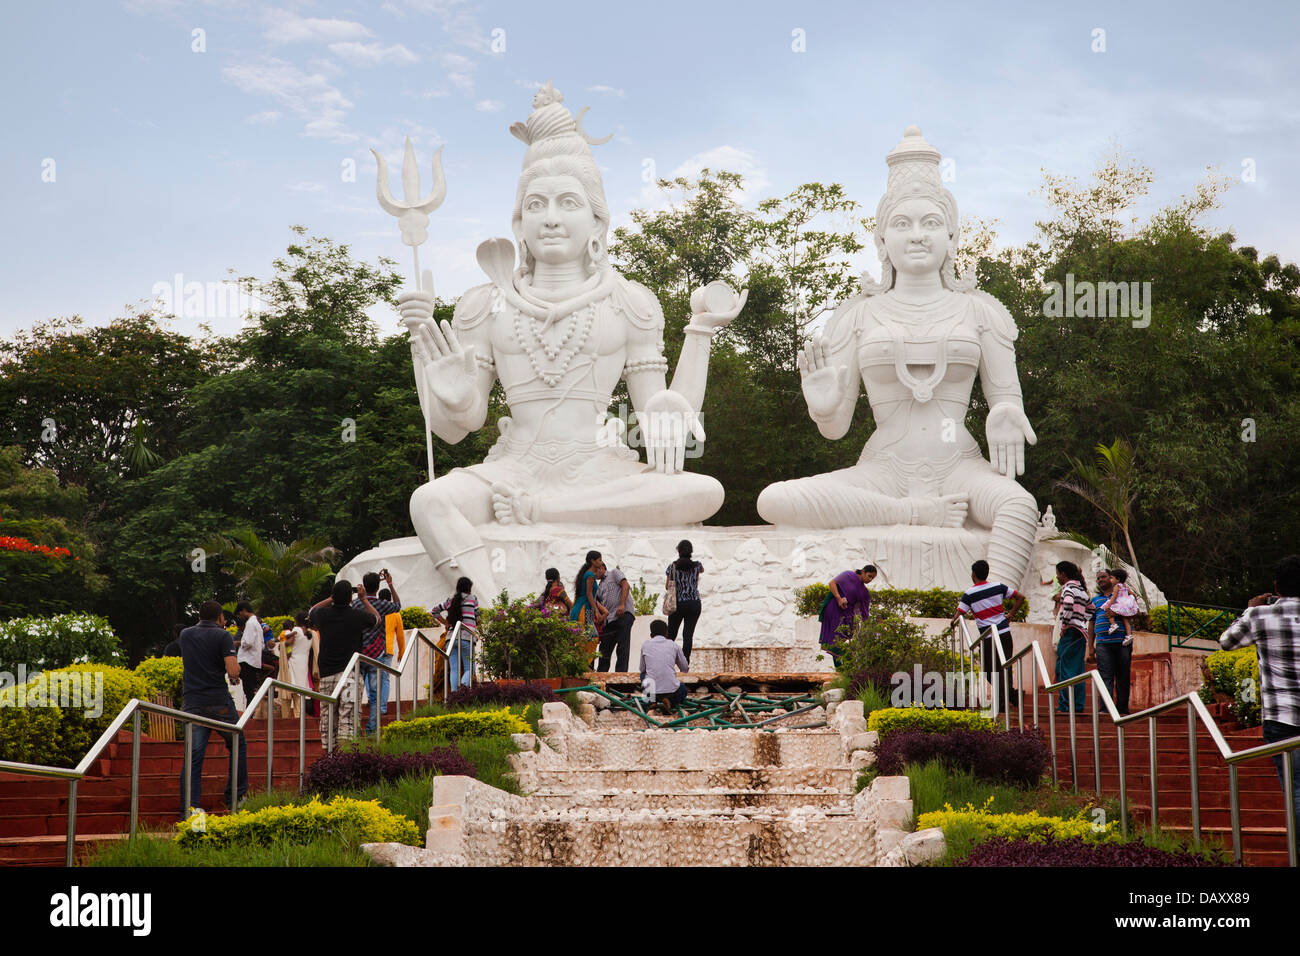 Statues of Lord Shiva and Goddess Parvathi in a park, Kailasagiri Park, Vishakhapatnam, Andhra Pradesh, India Stock Photo